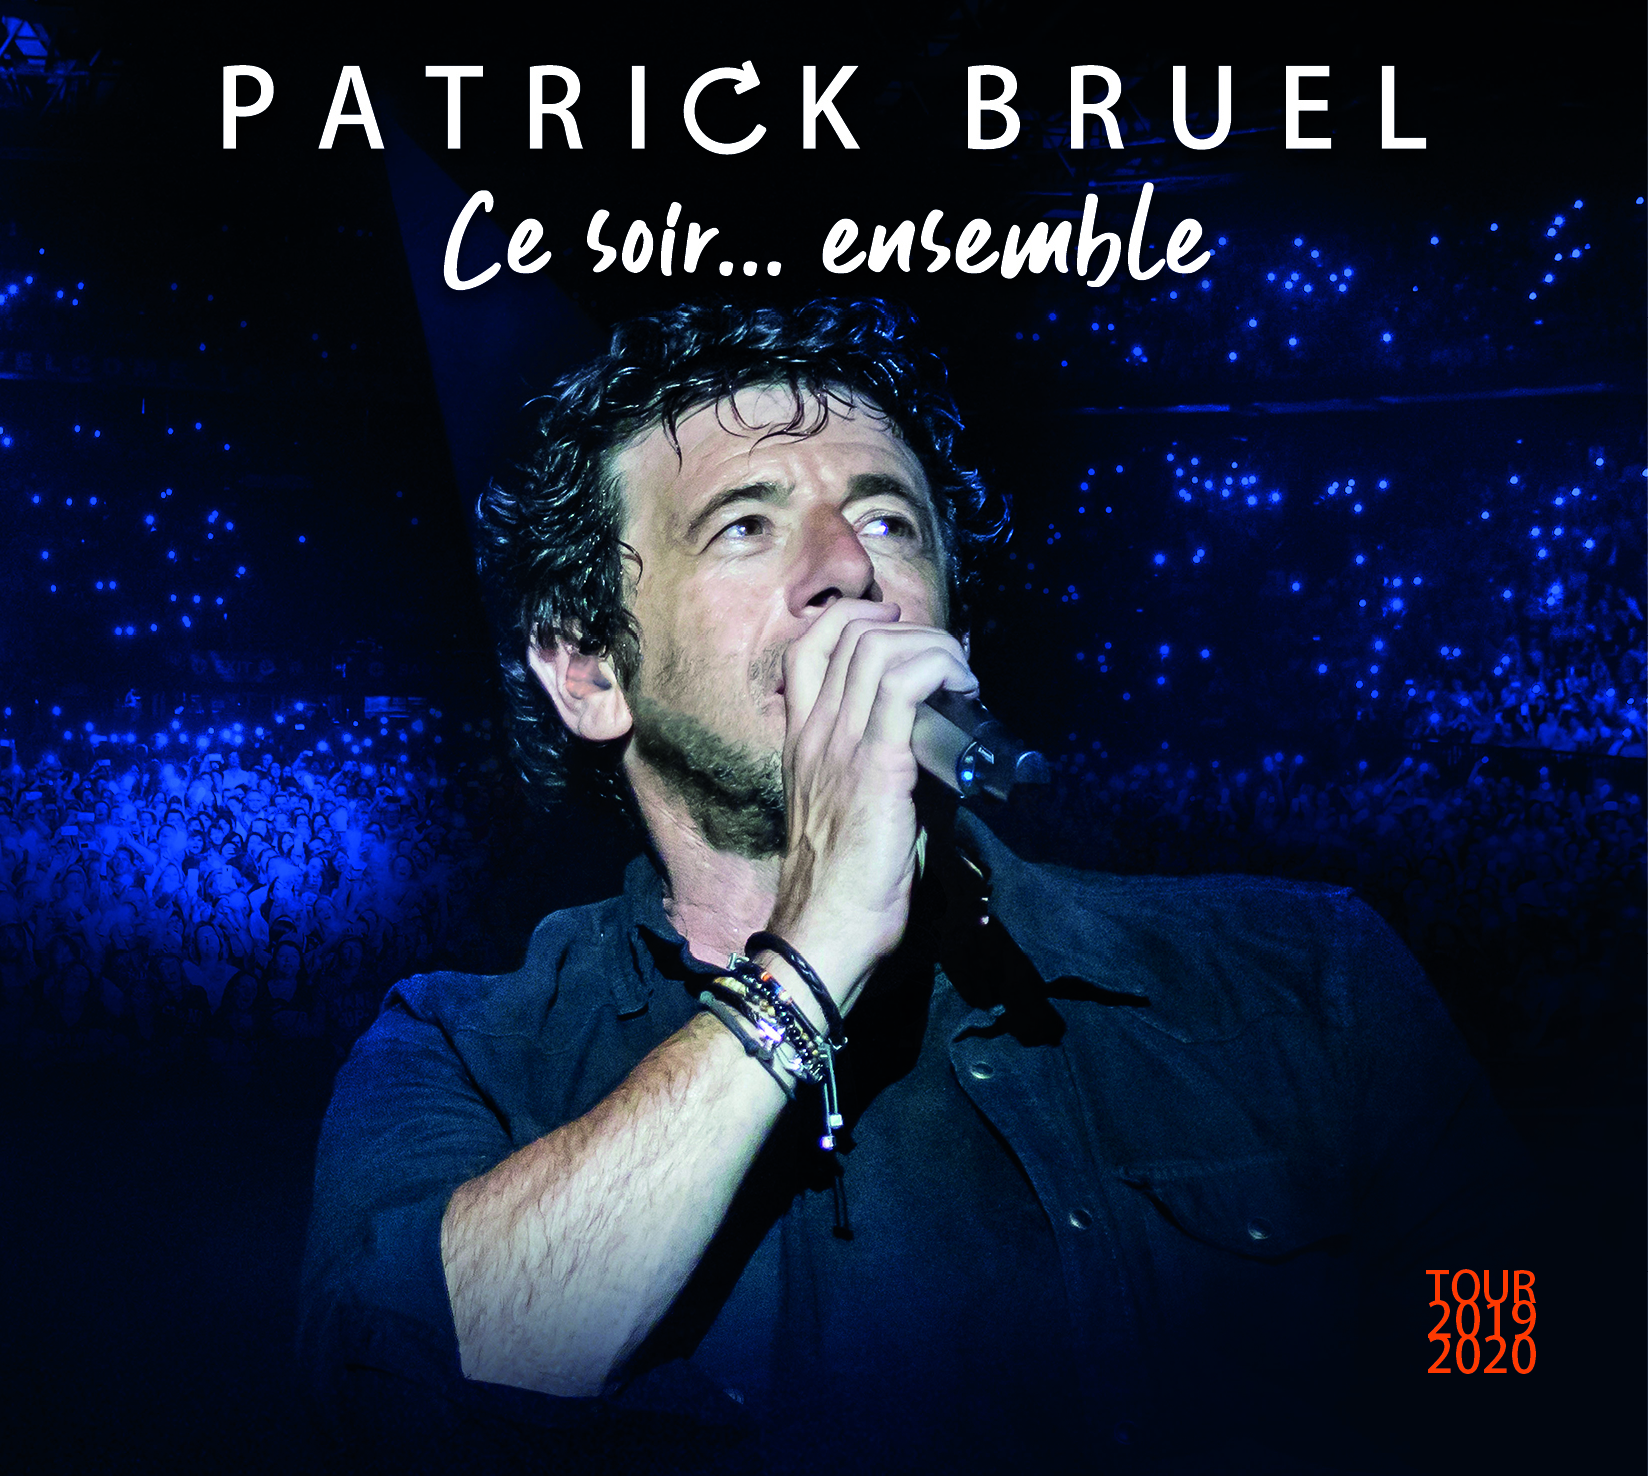 Patrick Bruel - Ce soir ensemble